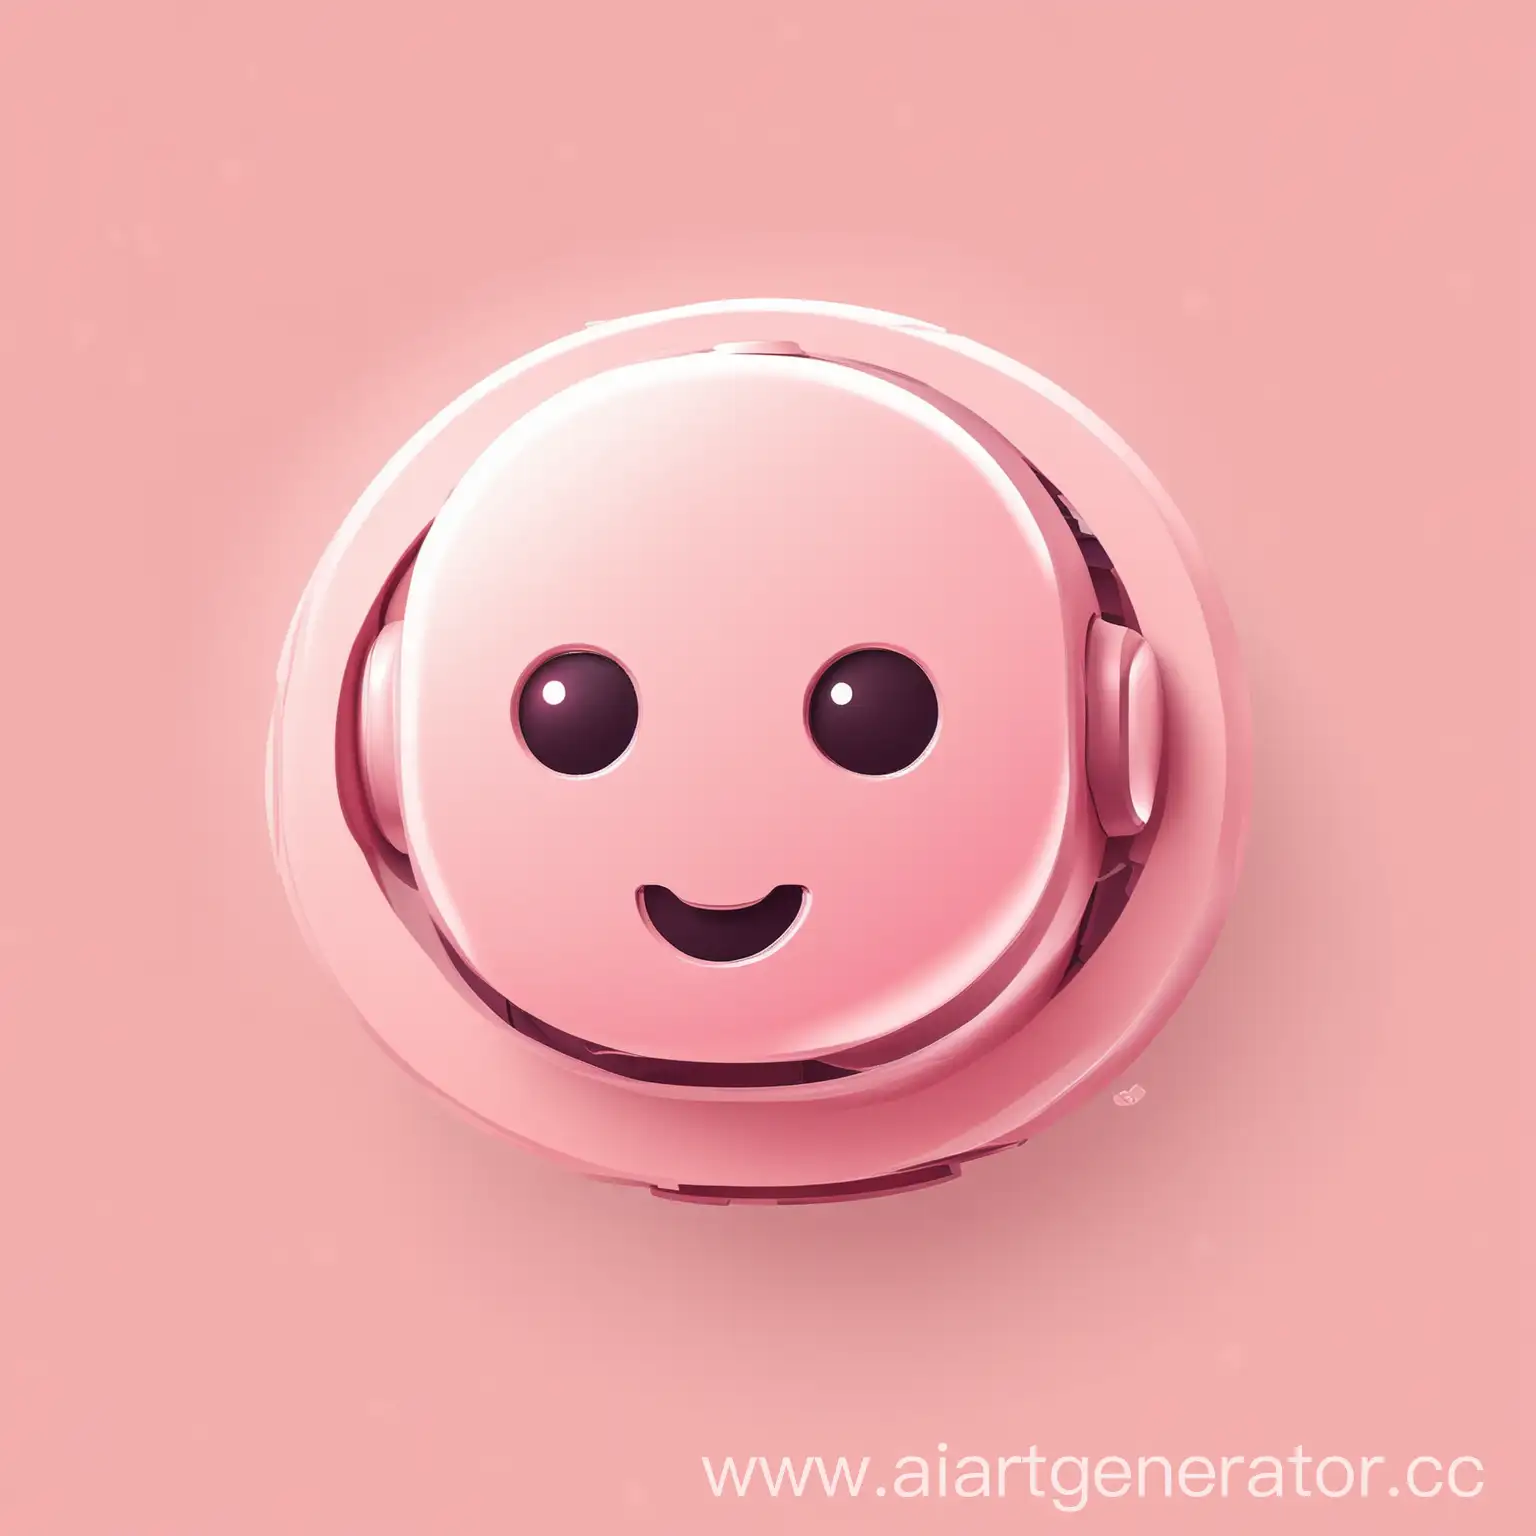 Modern-Stylish-ChatBot-Logo-for-Personalized-Fanfics